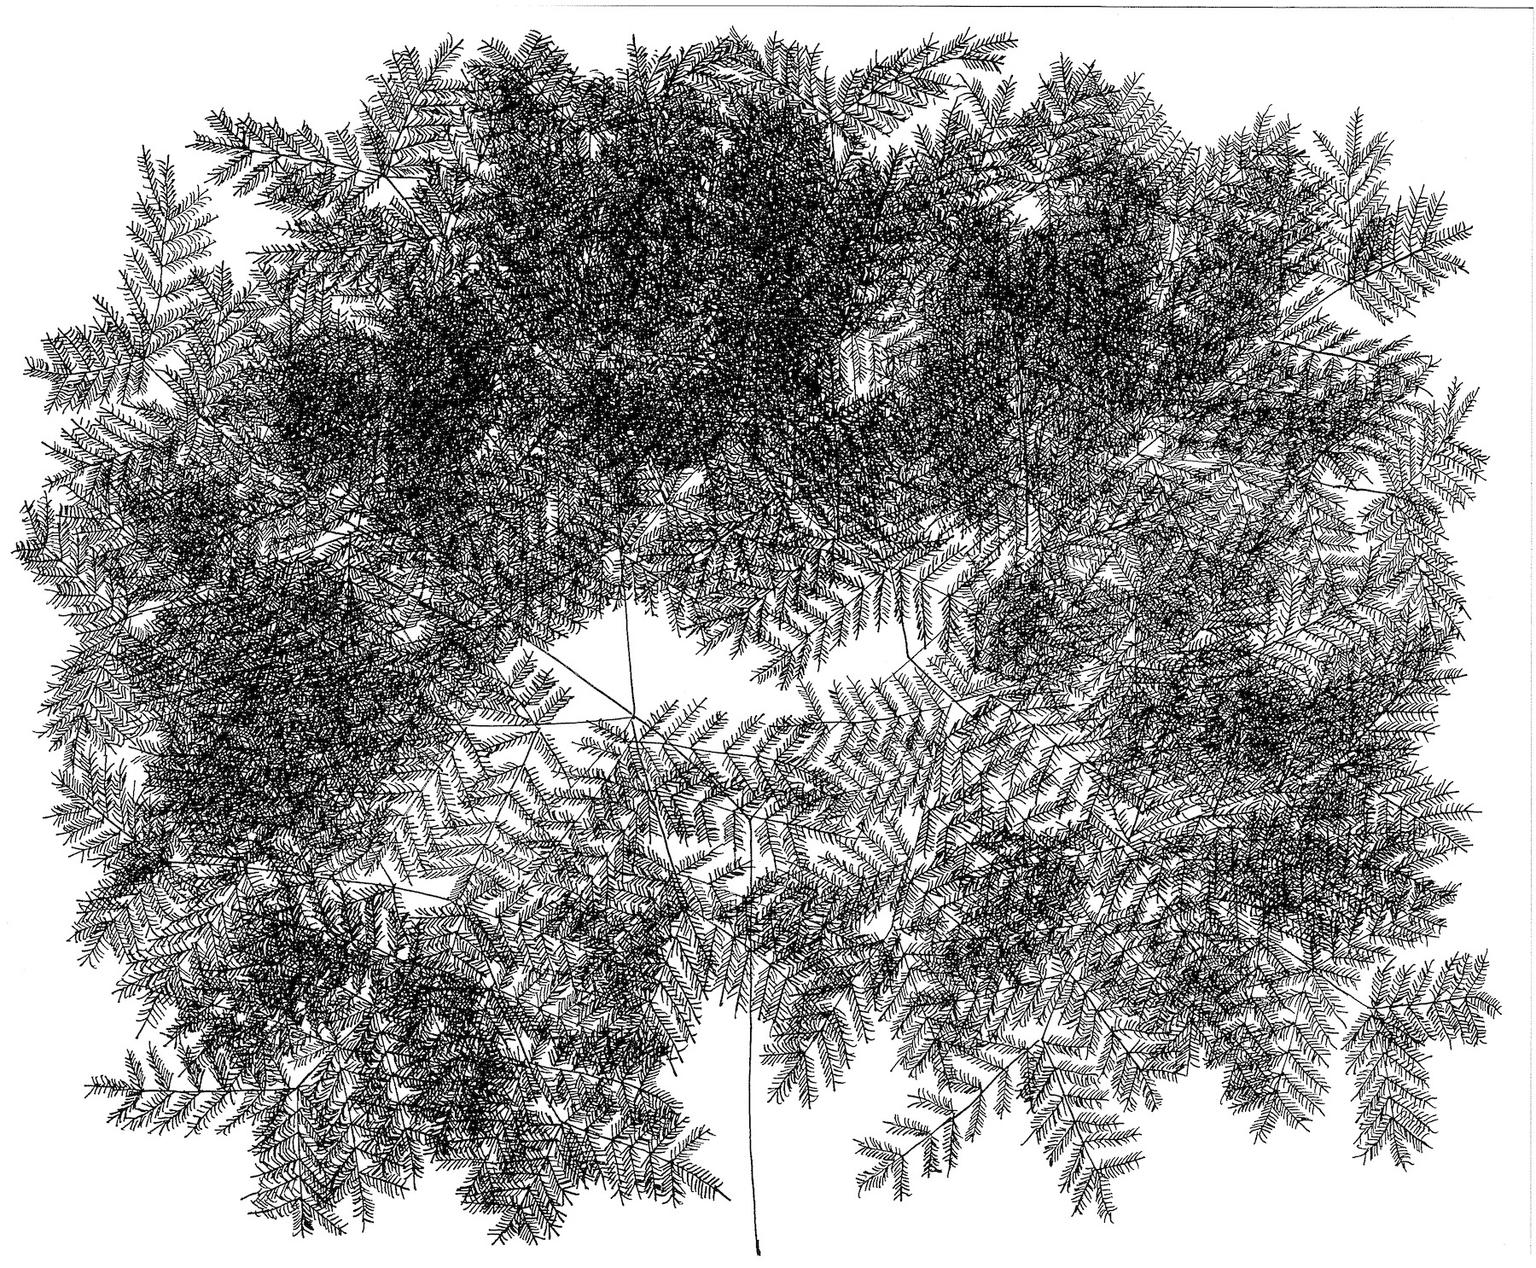 Image for entry 'Fibonacci Tree Horizontal 21'